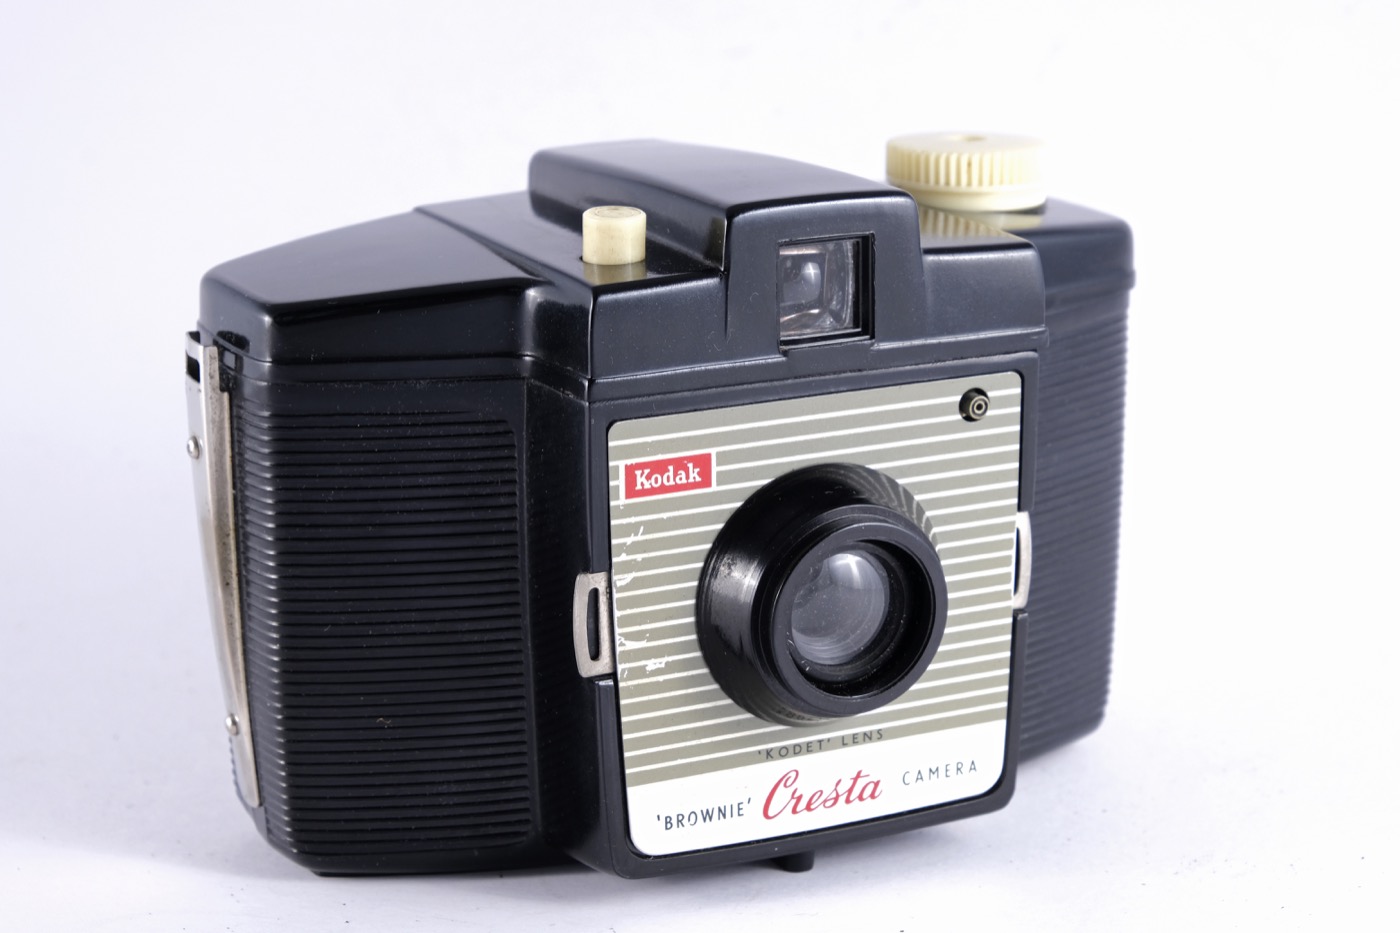 Kodak Brownie Cresta camera